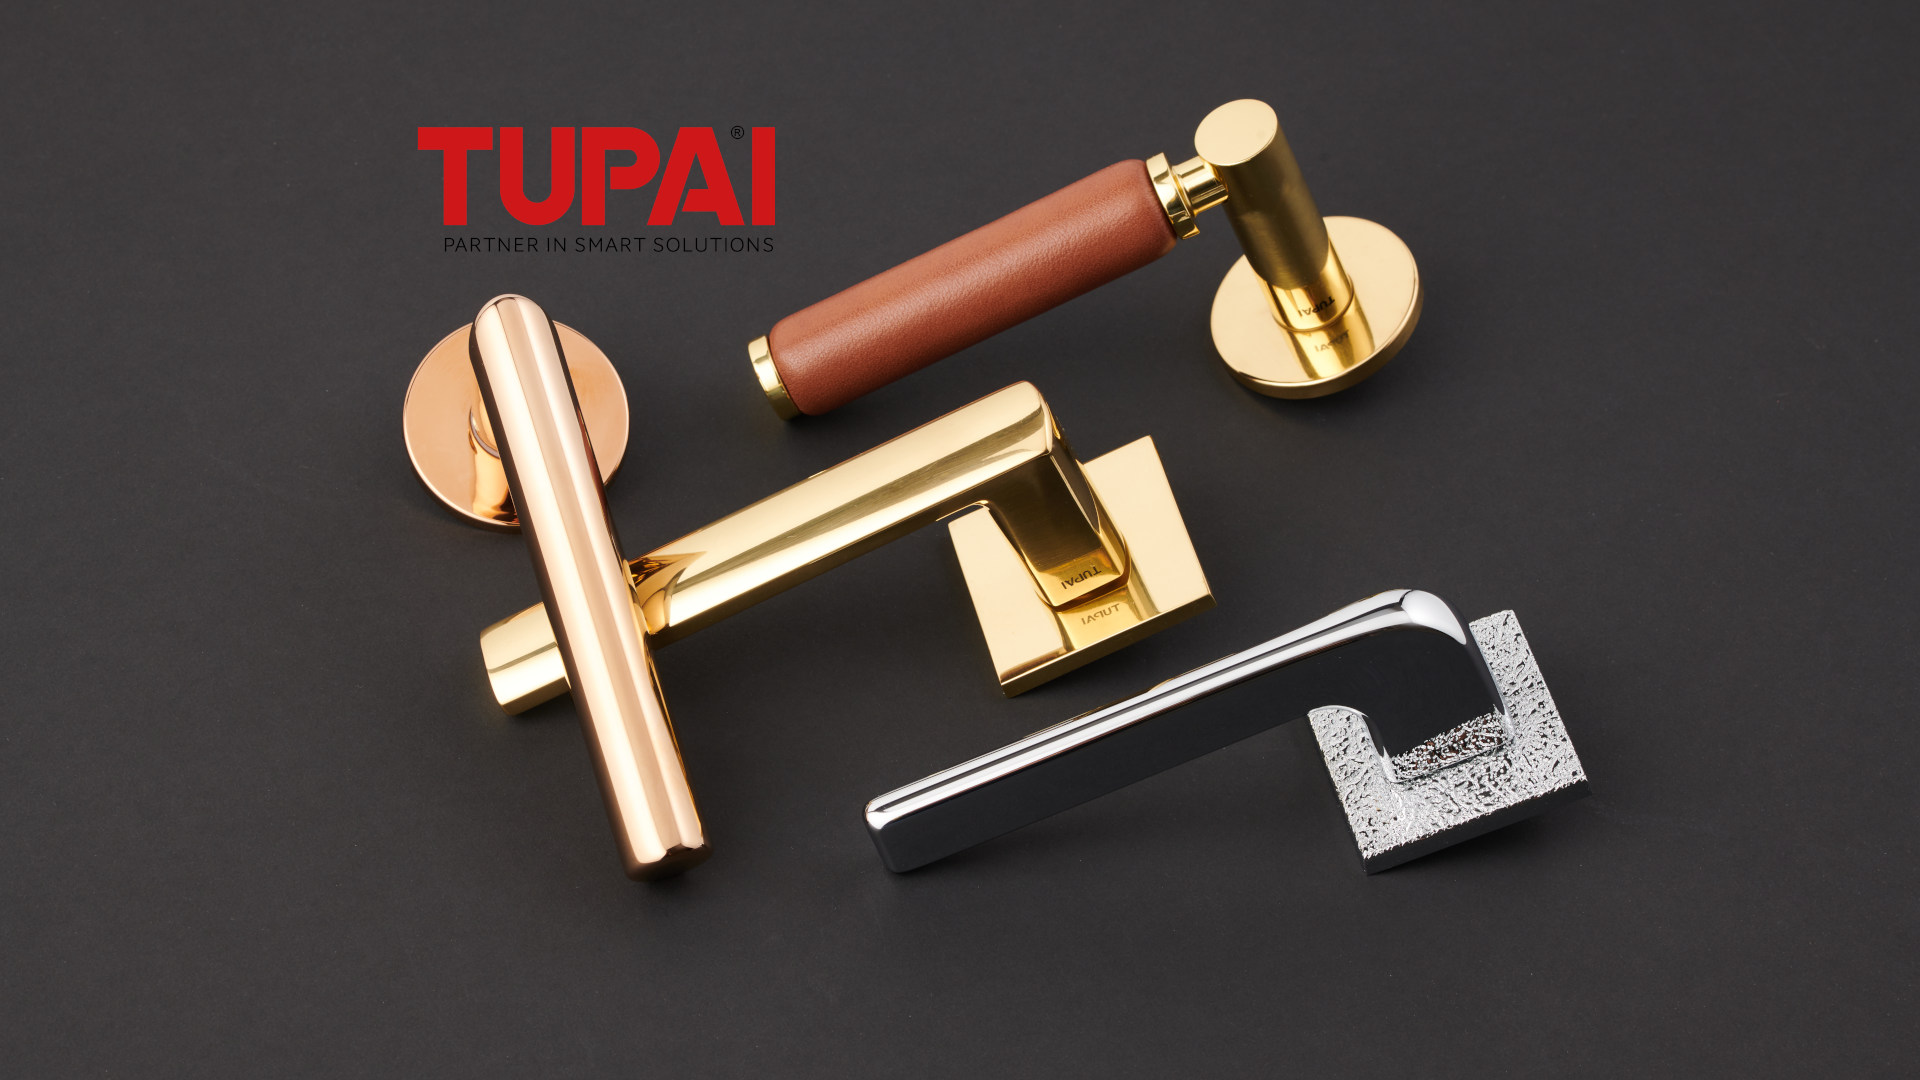 Klamki Tupai – poznaj jakość i design na lata!